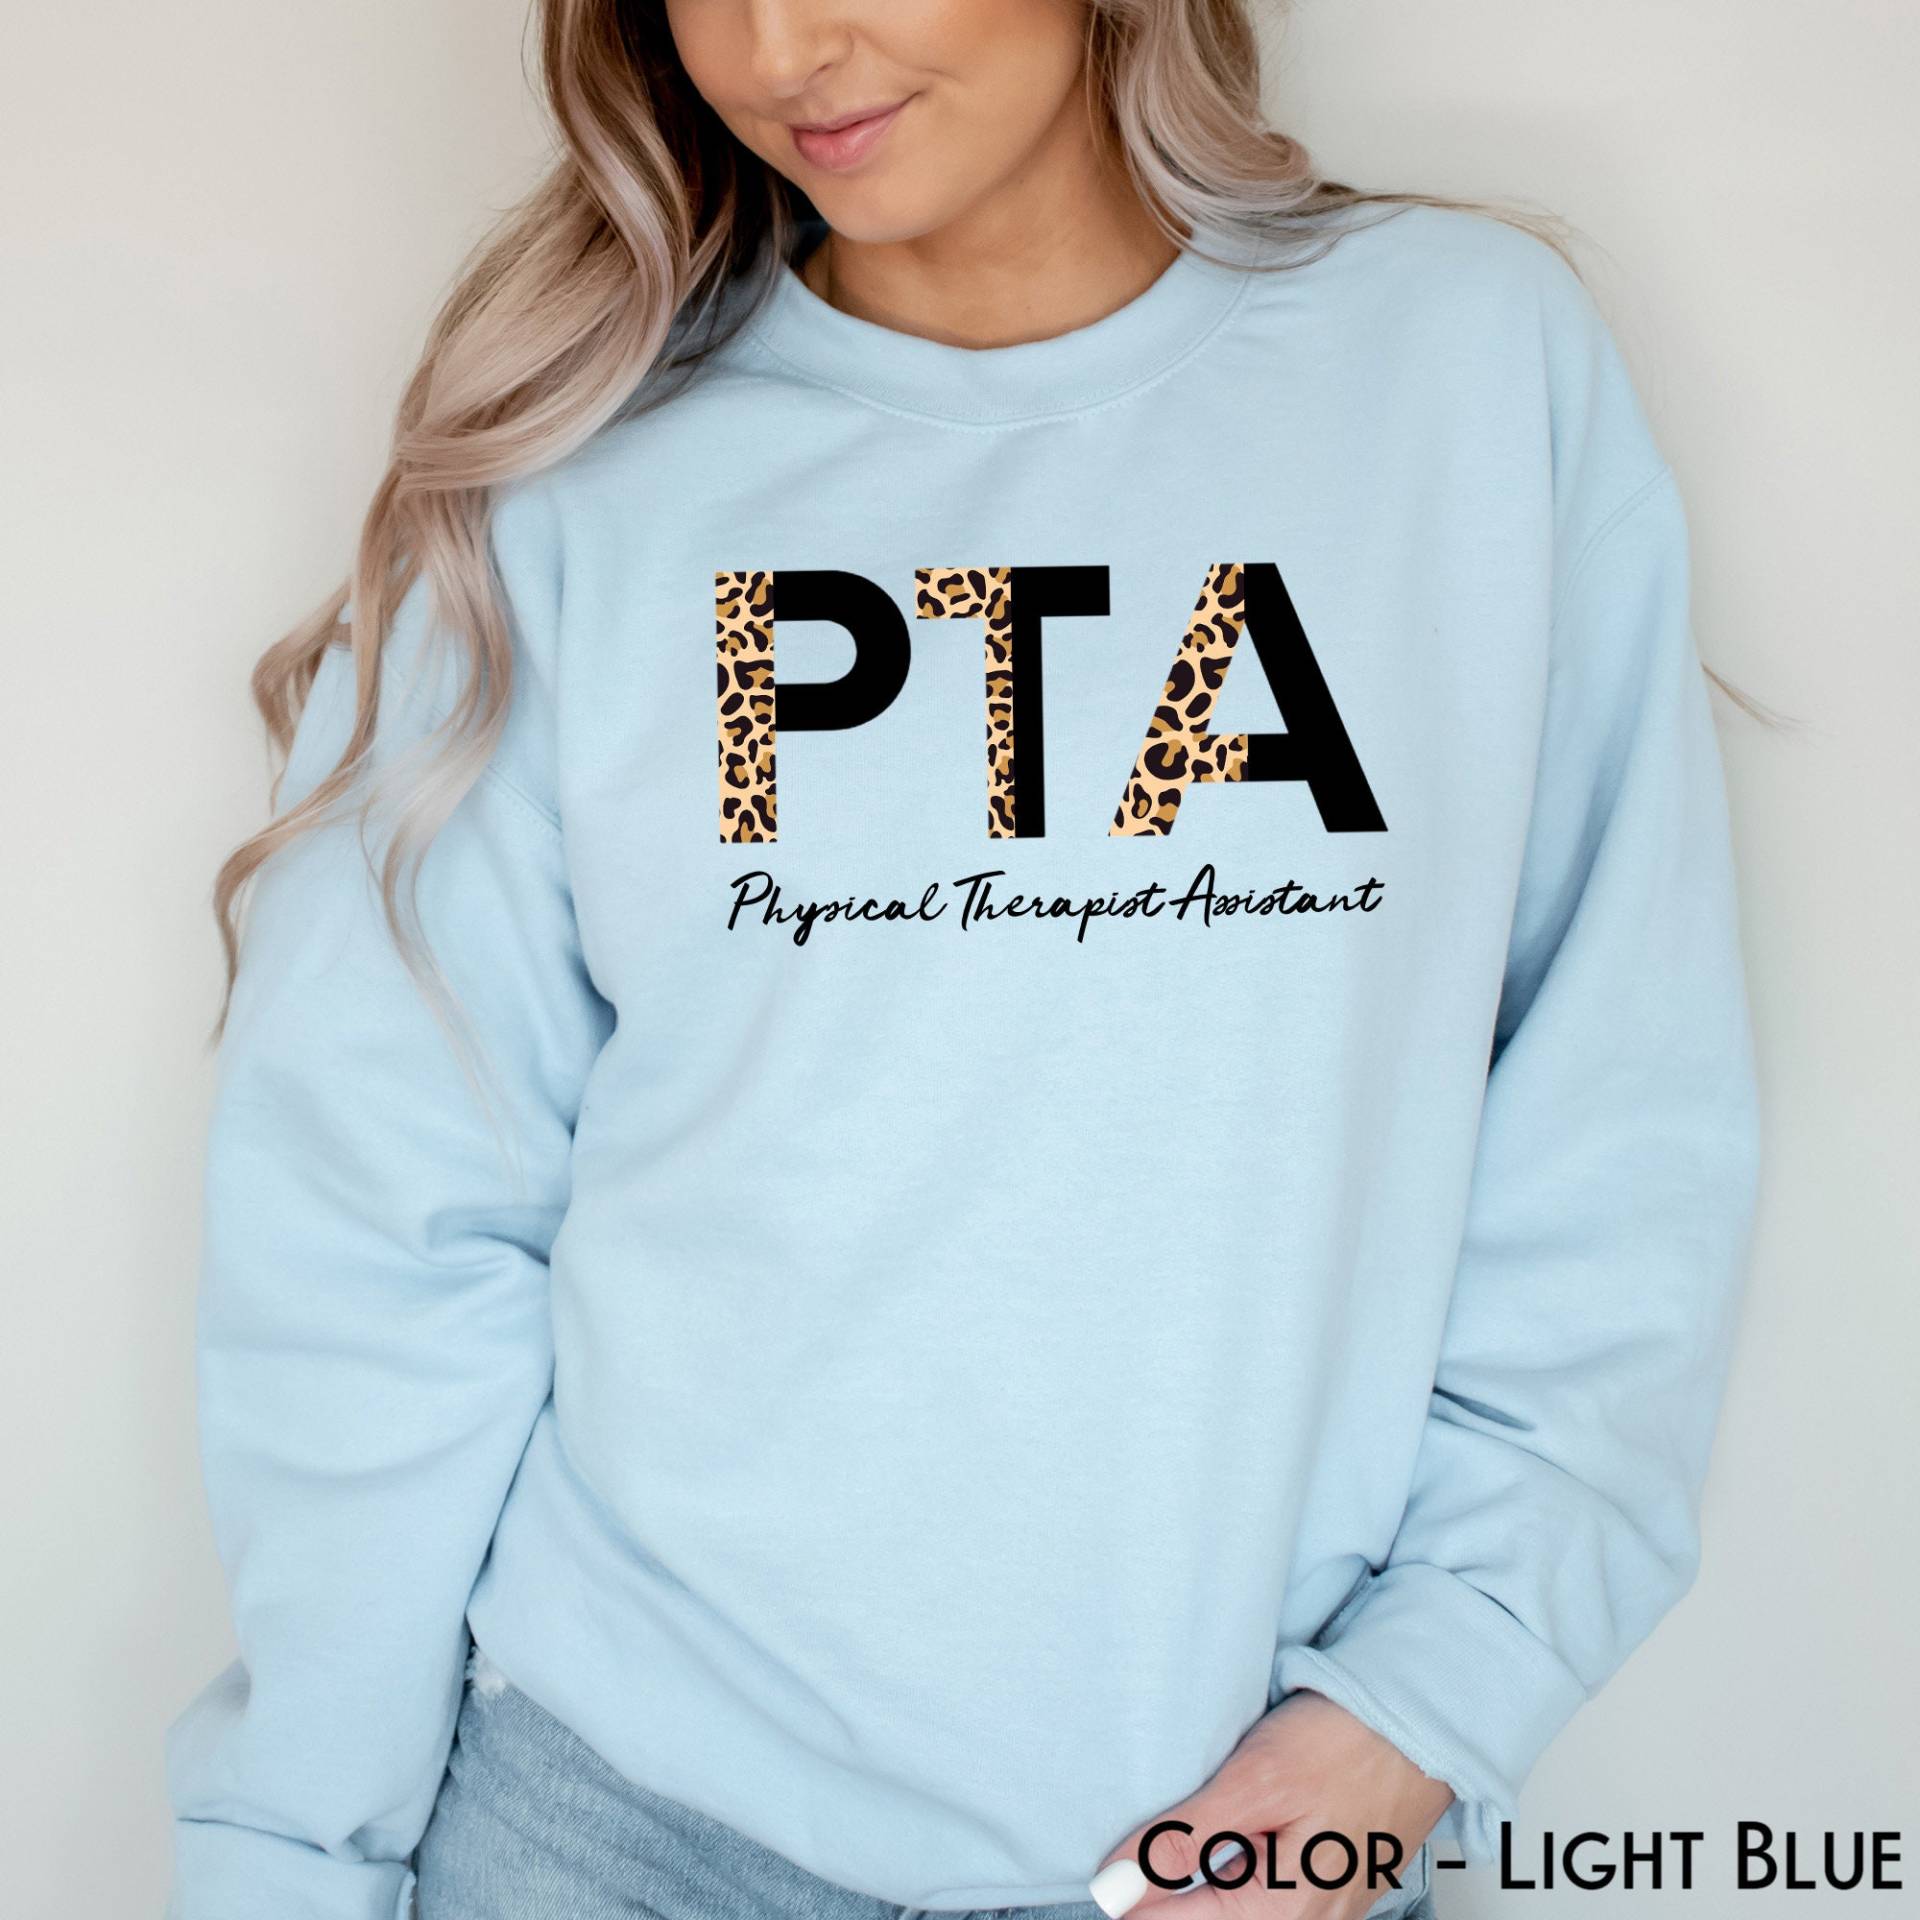 Physiotherapeutinnen Sweatshirt, Pta Pullover, Therapeut Student Shirt, Physiotherapie T-Shirt, Ptt Therapie Shirt von APComfortPrints